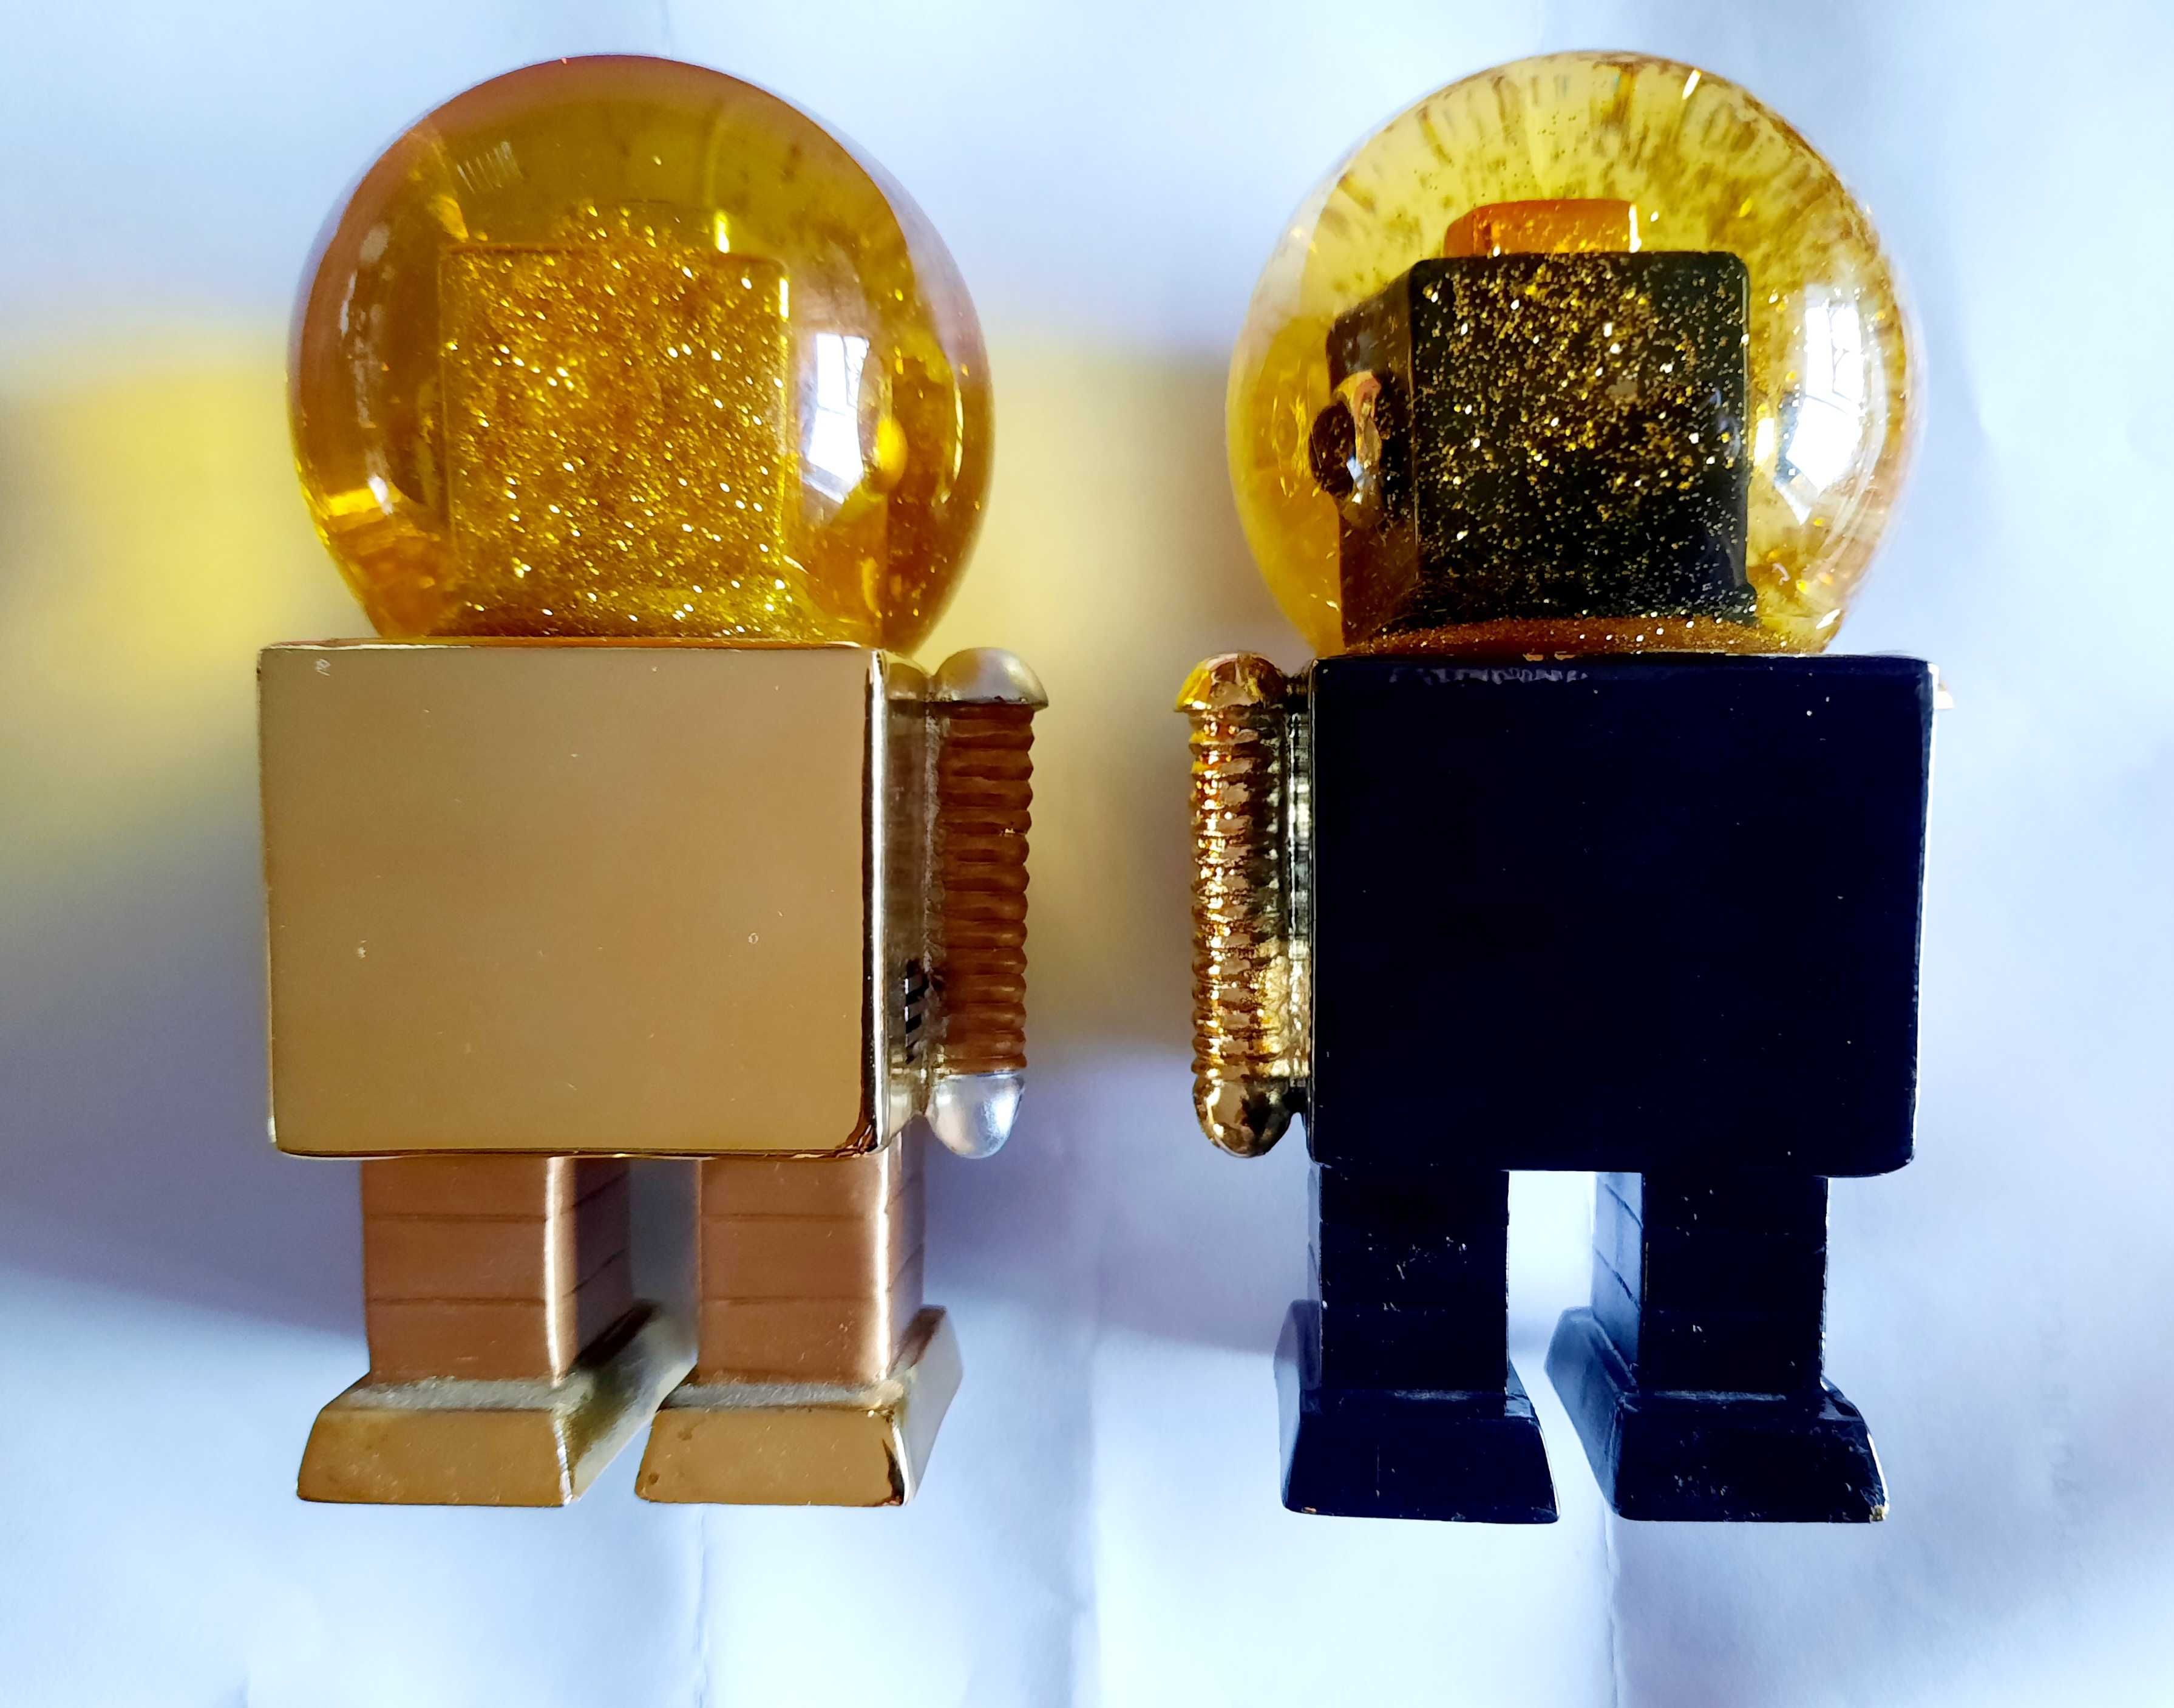 2 Robots "Donkey" - Summerglobe. Gold e Black